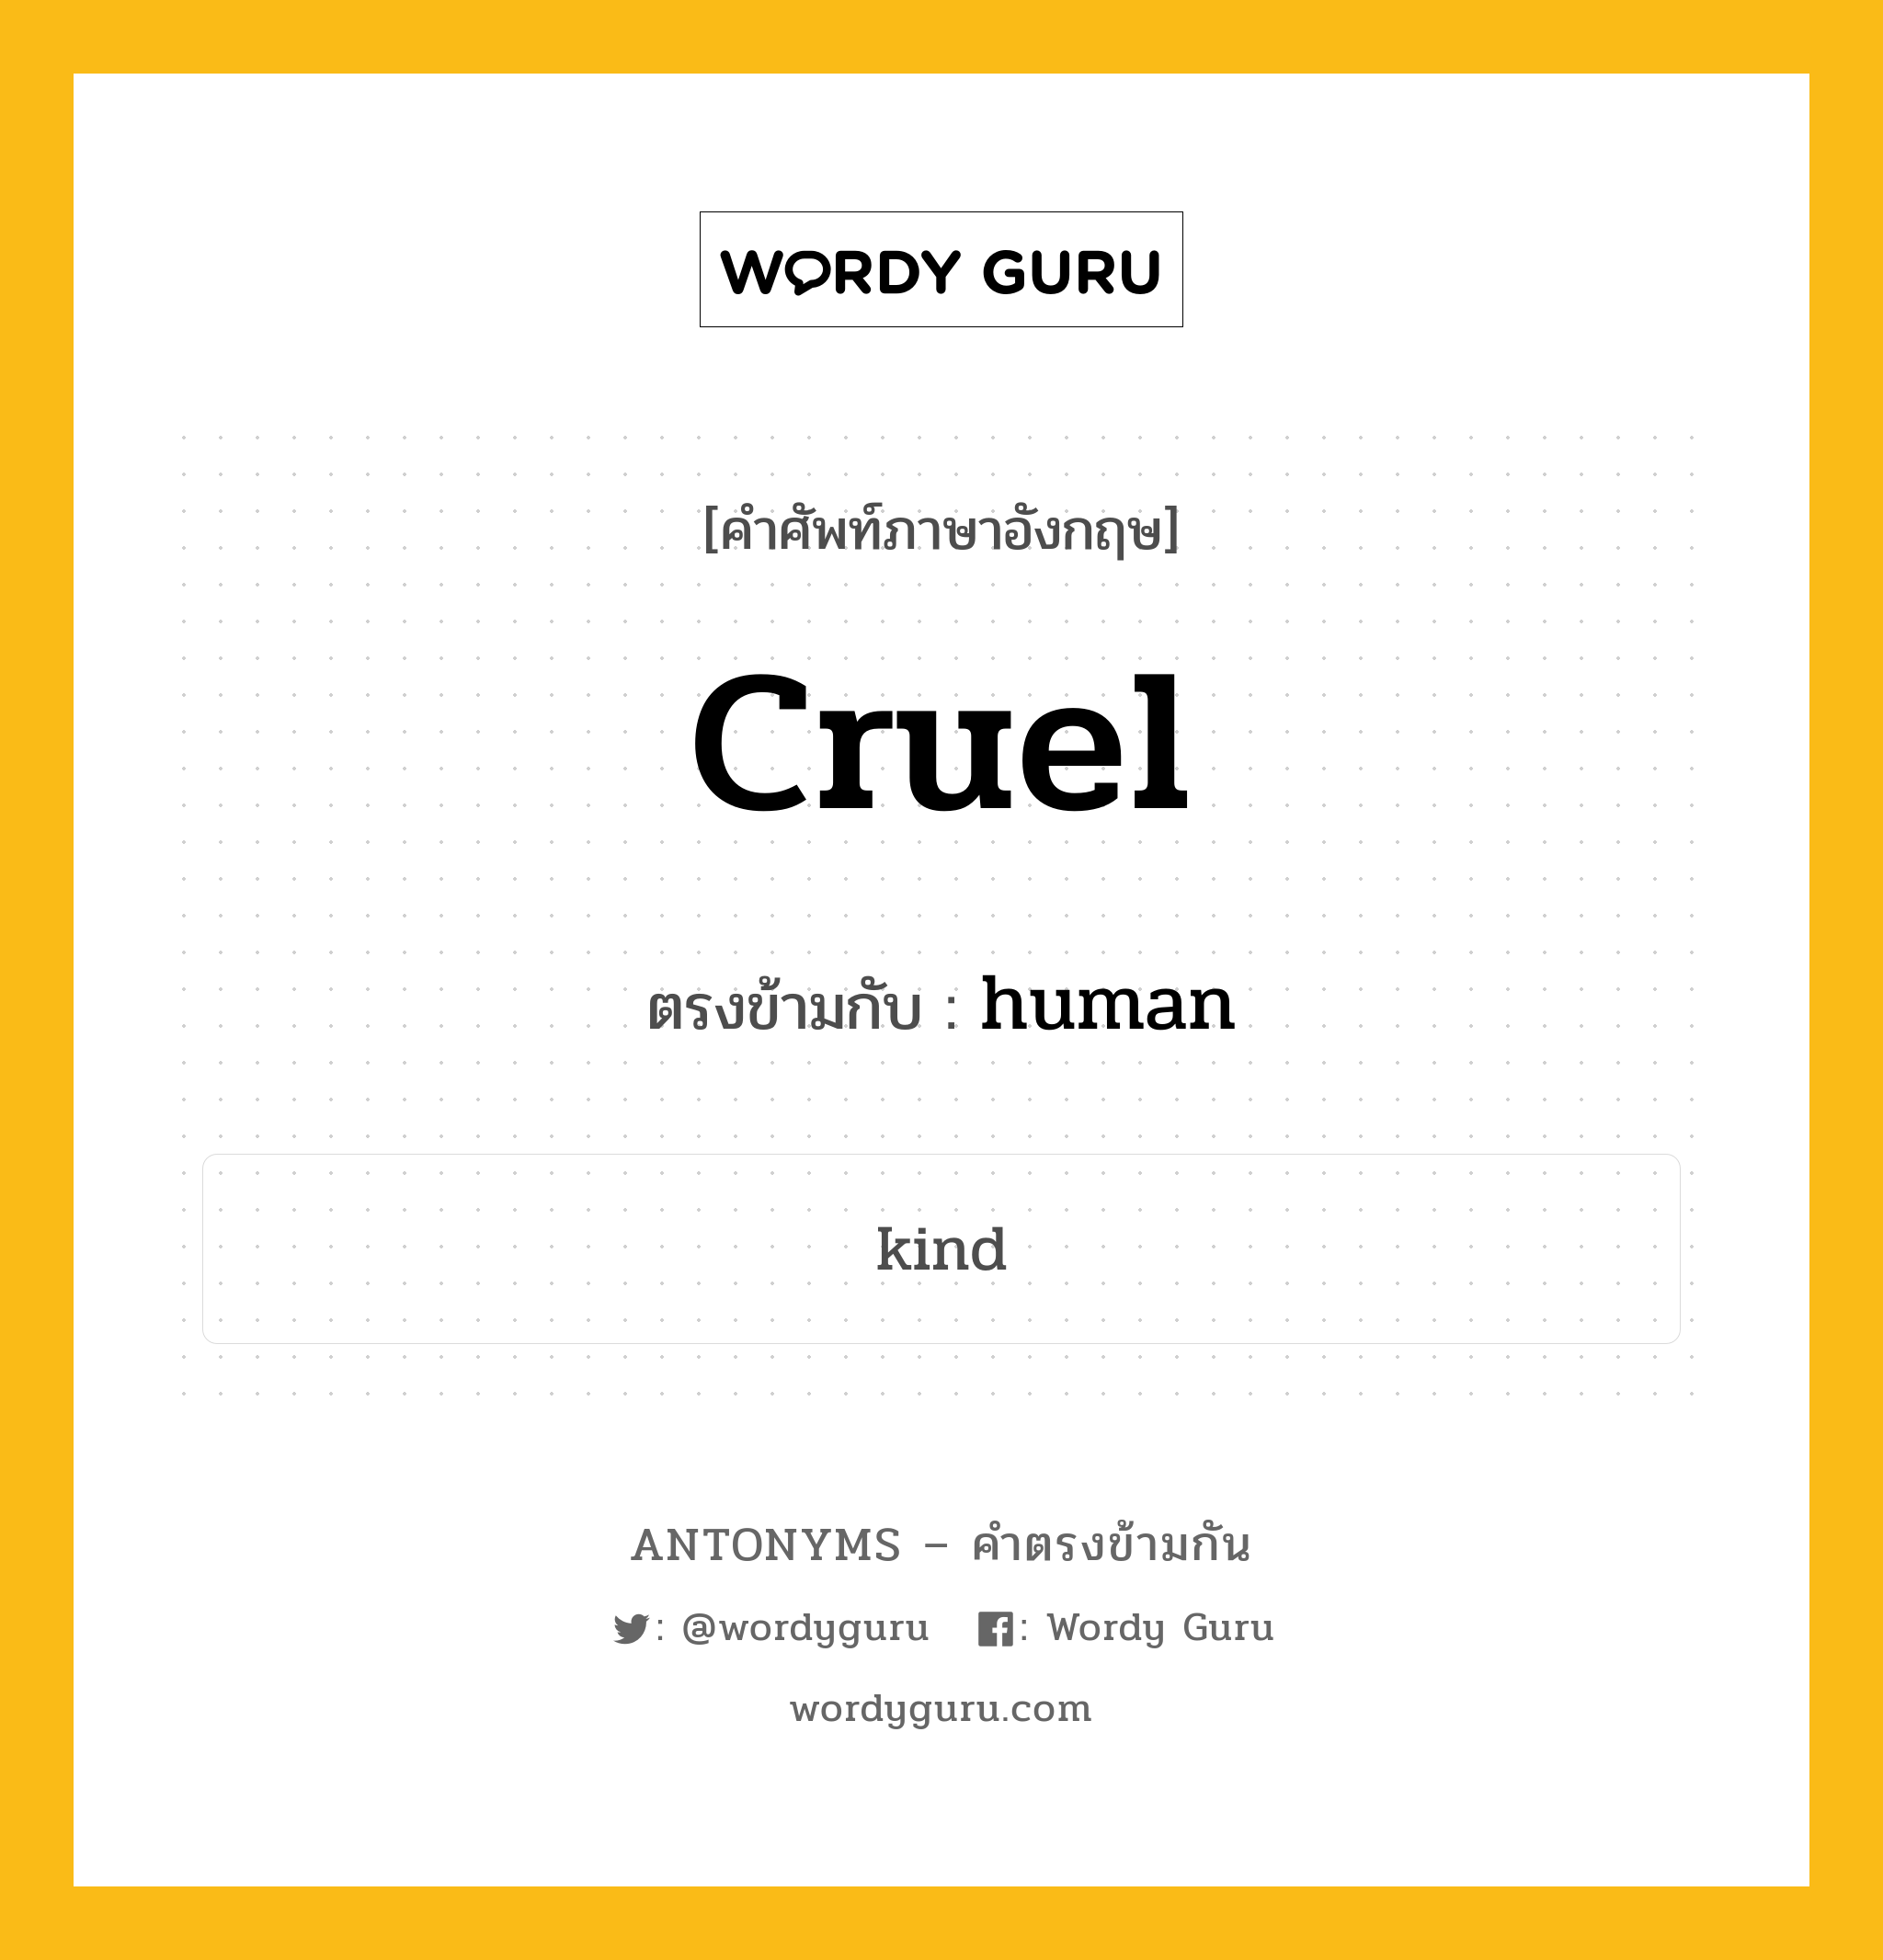 cruel เป็นคำตรงข้ามกับคำไหนบ้าง?, คำศัพท์ภาษาอังกฤษ cruel ตรงข้ามกับ human หมวด human